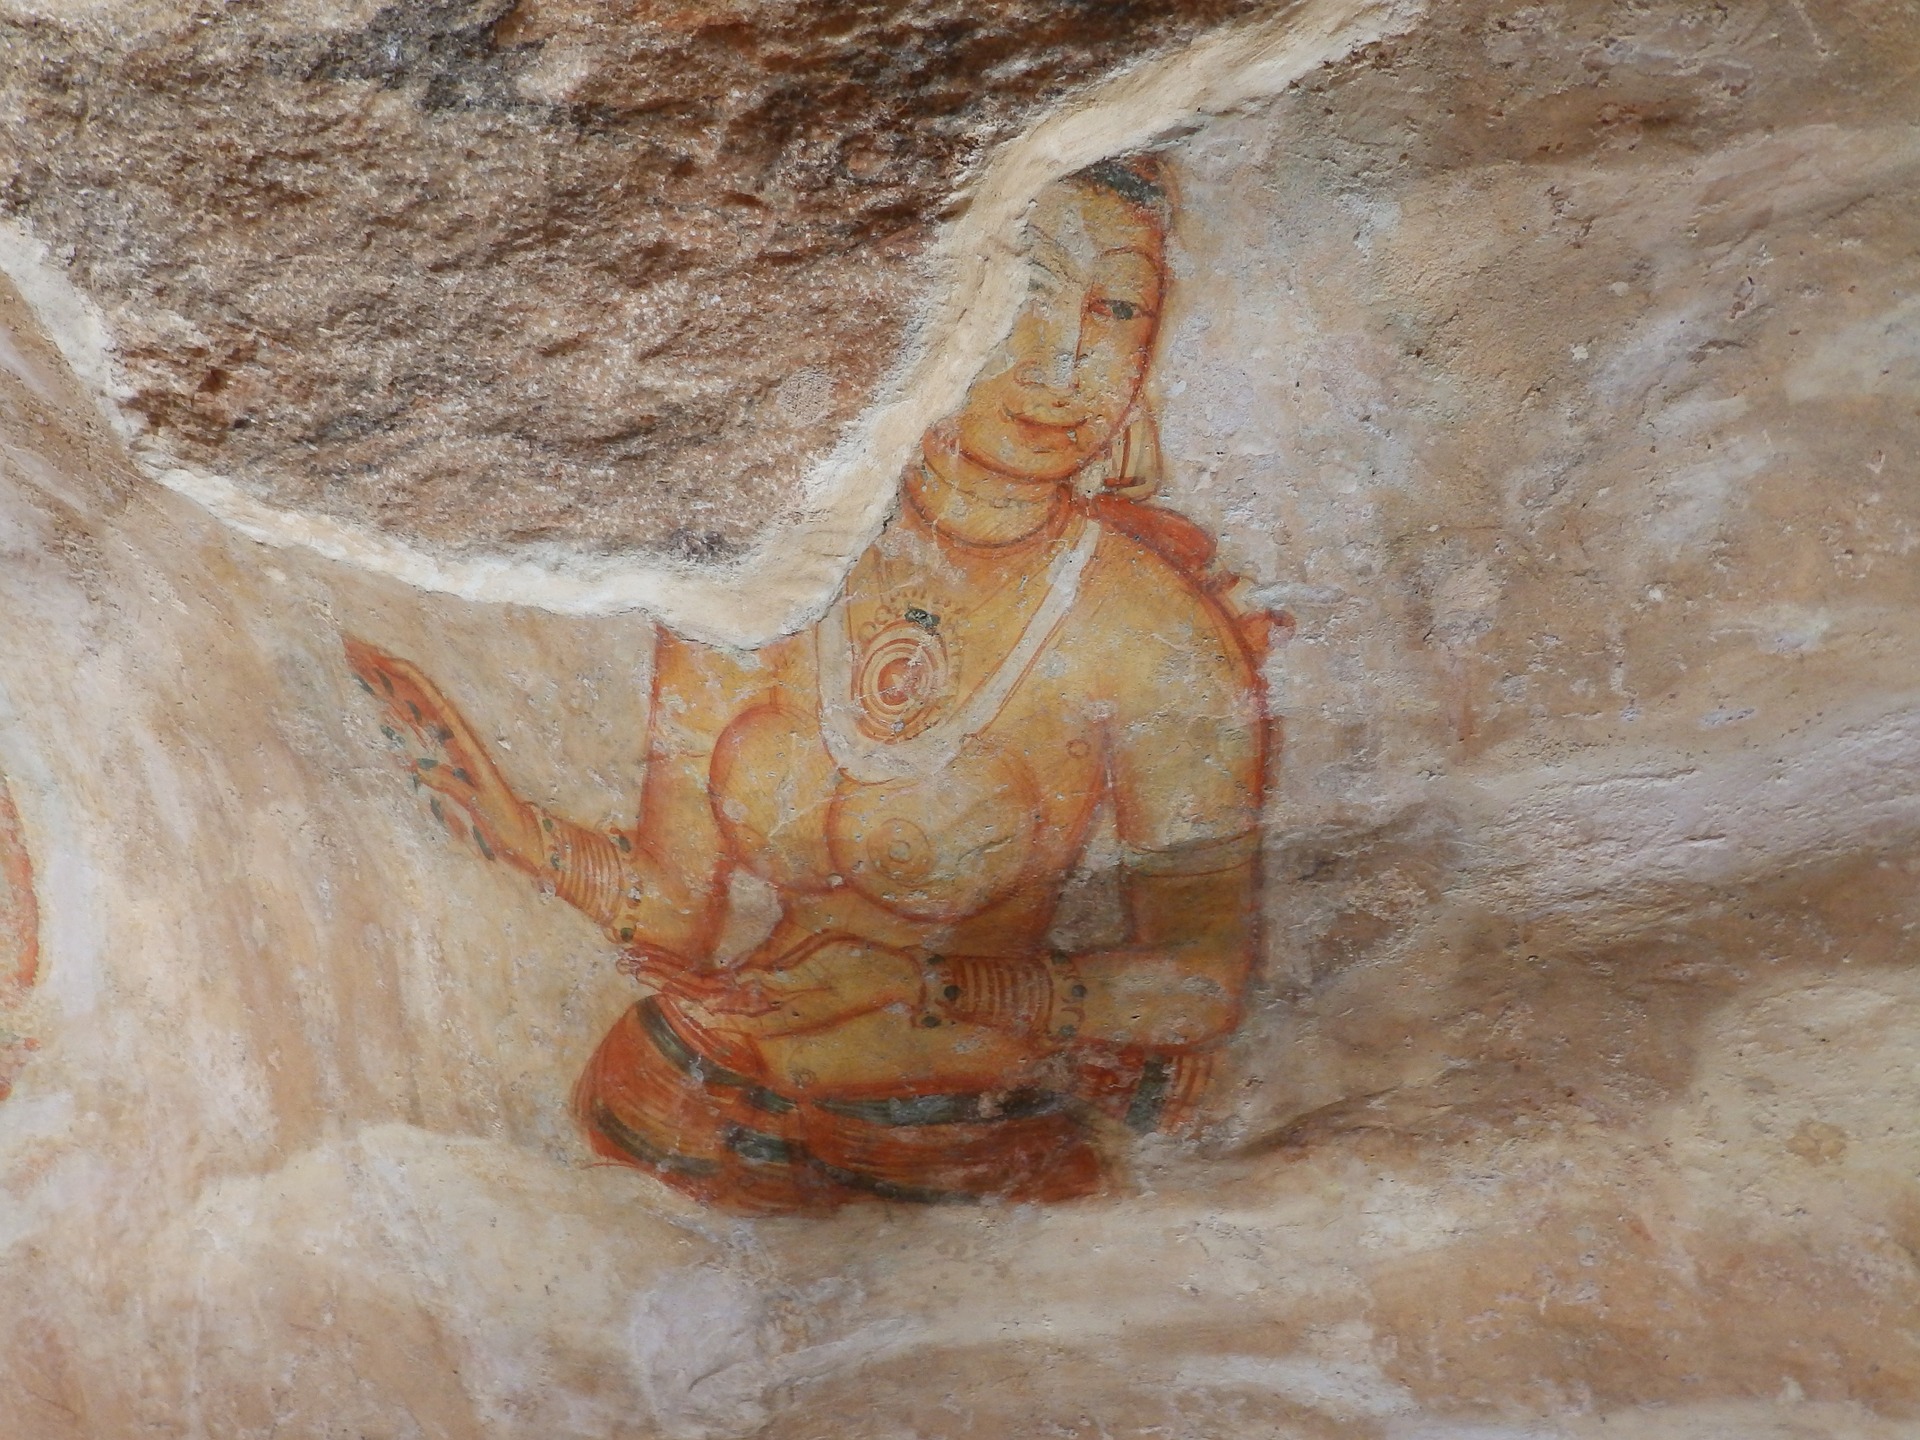 A smiling, bare-breasted Apsara painted on Sigiriya's rock wall.